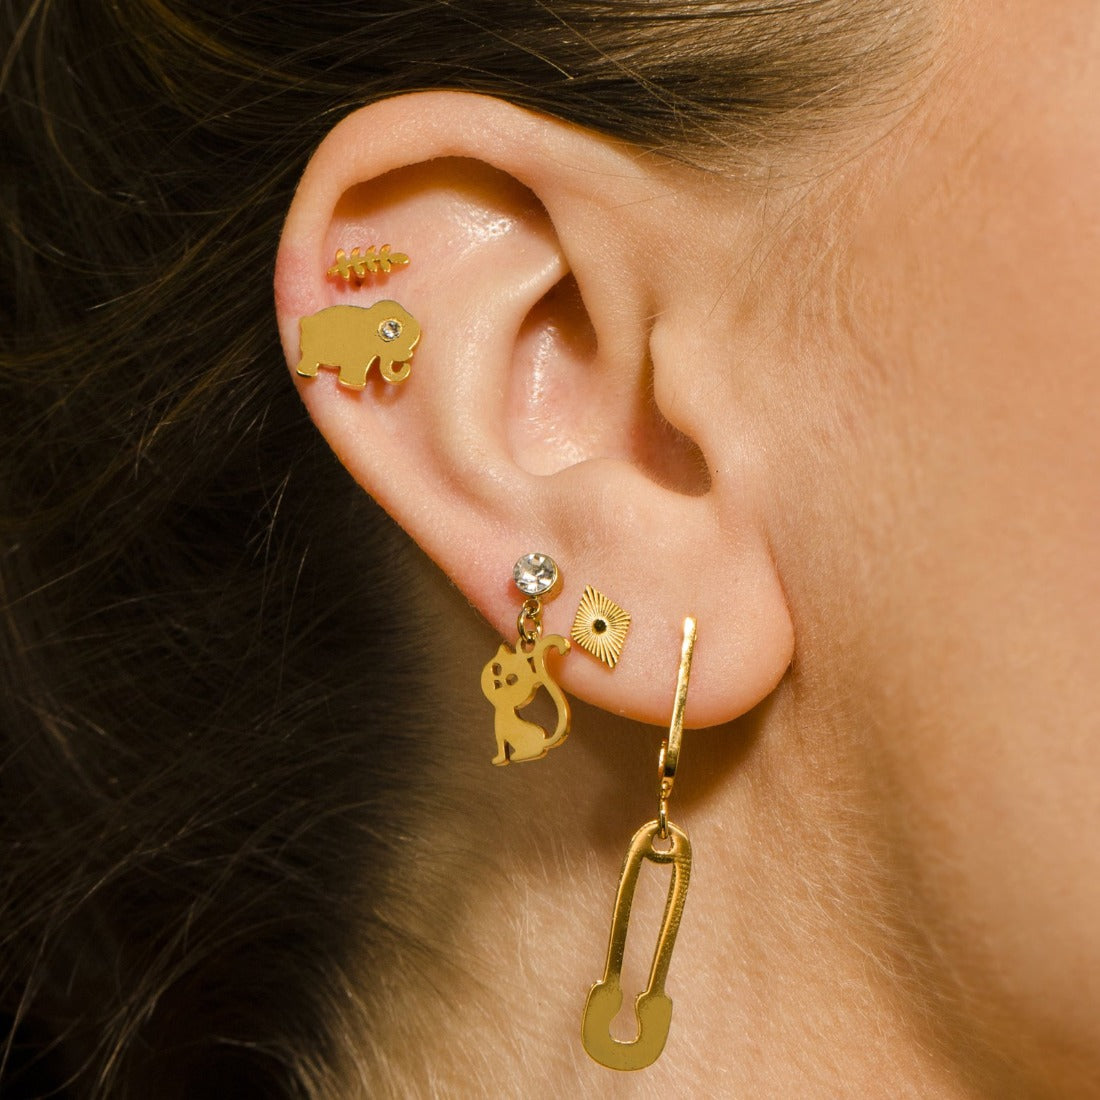 hackney_nine | hackneynine | BRIXTON21266_earrings | safety_pin_earrings | affordable_jewelry | dainty_jewelry | stainless_steel_jewelry | 18K_gold_jewelry | gold_dipped_jewelry | gold-jewelry | punk_rocker